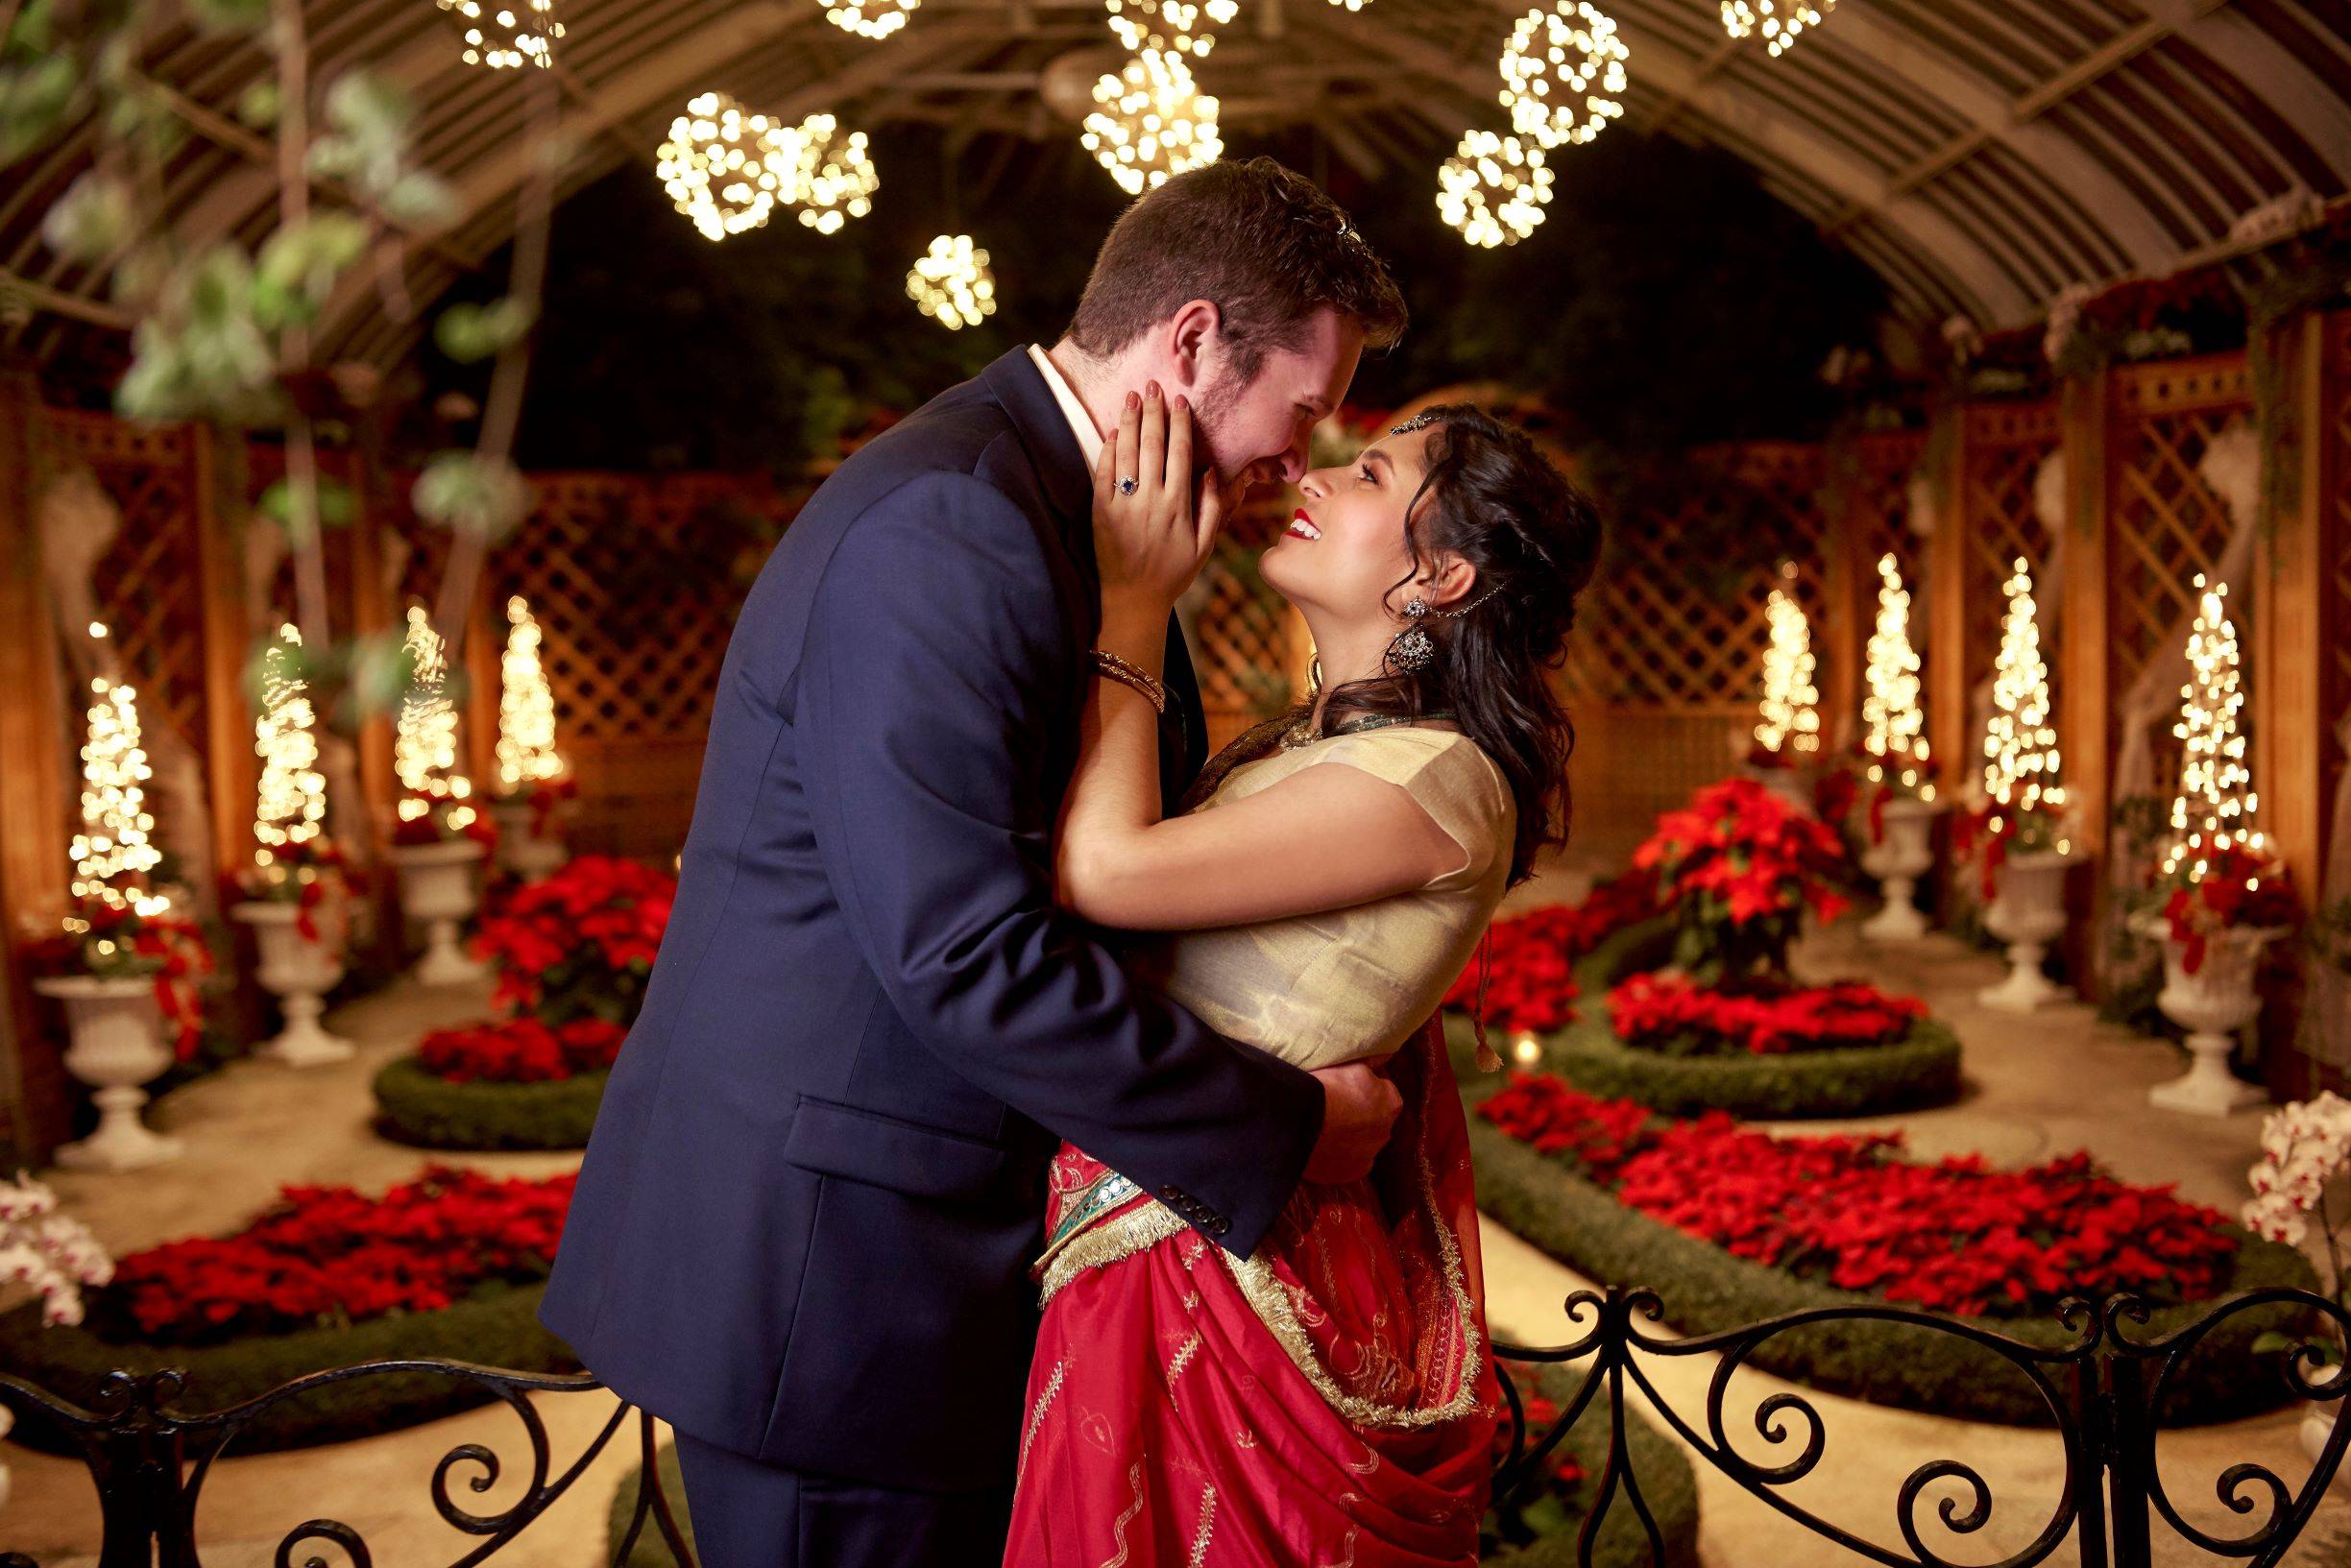 Henne Engagement Ring Couple Daniel & Praneeta Share a Kiss